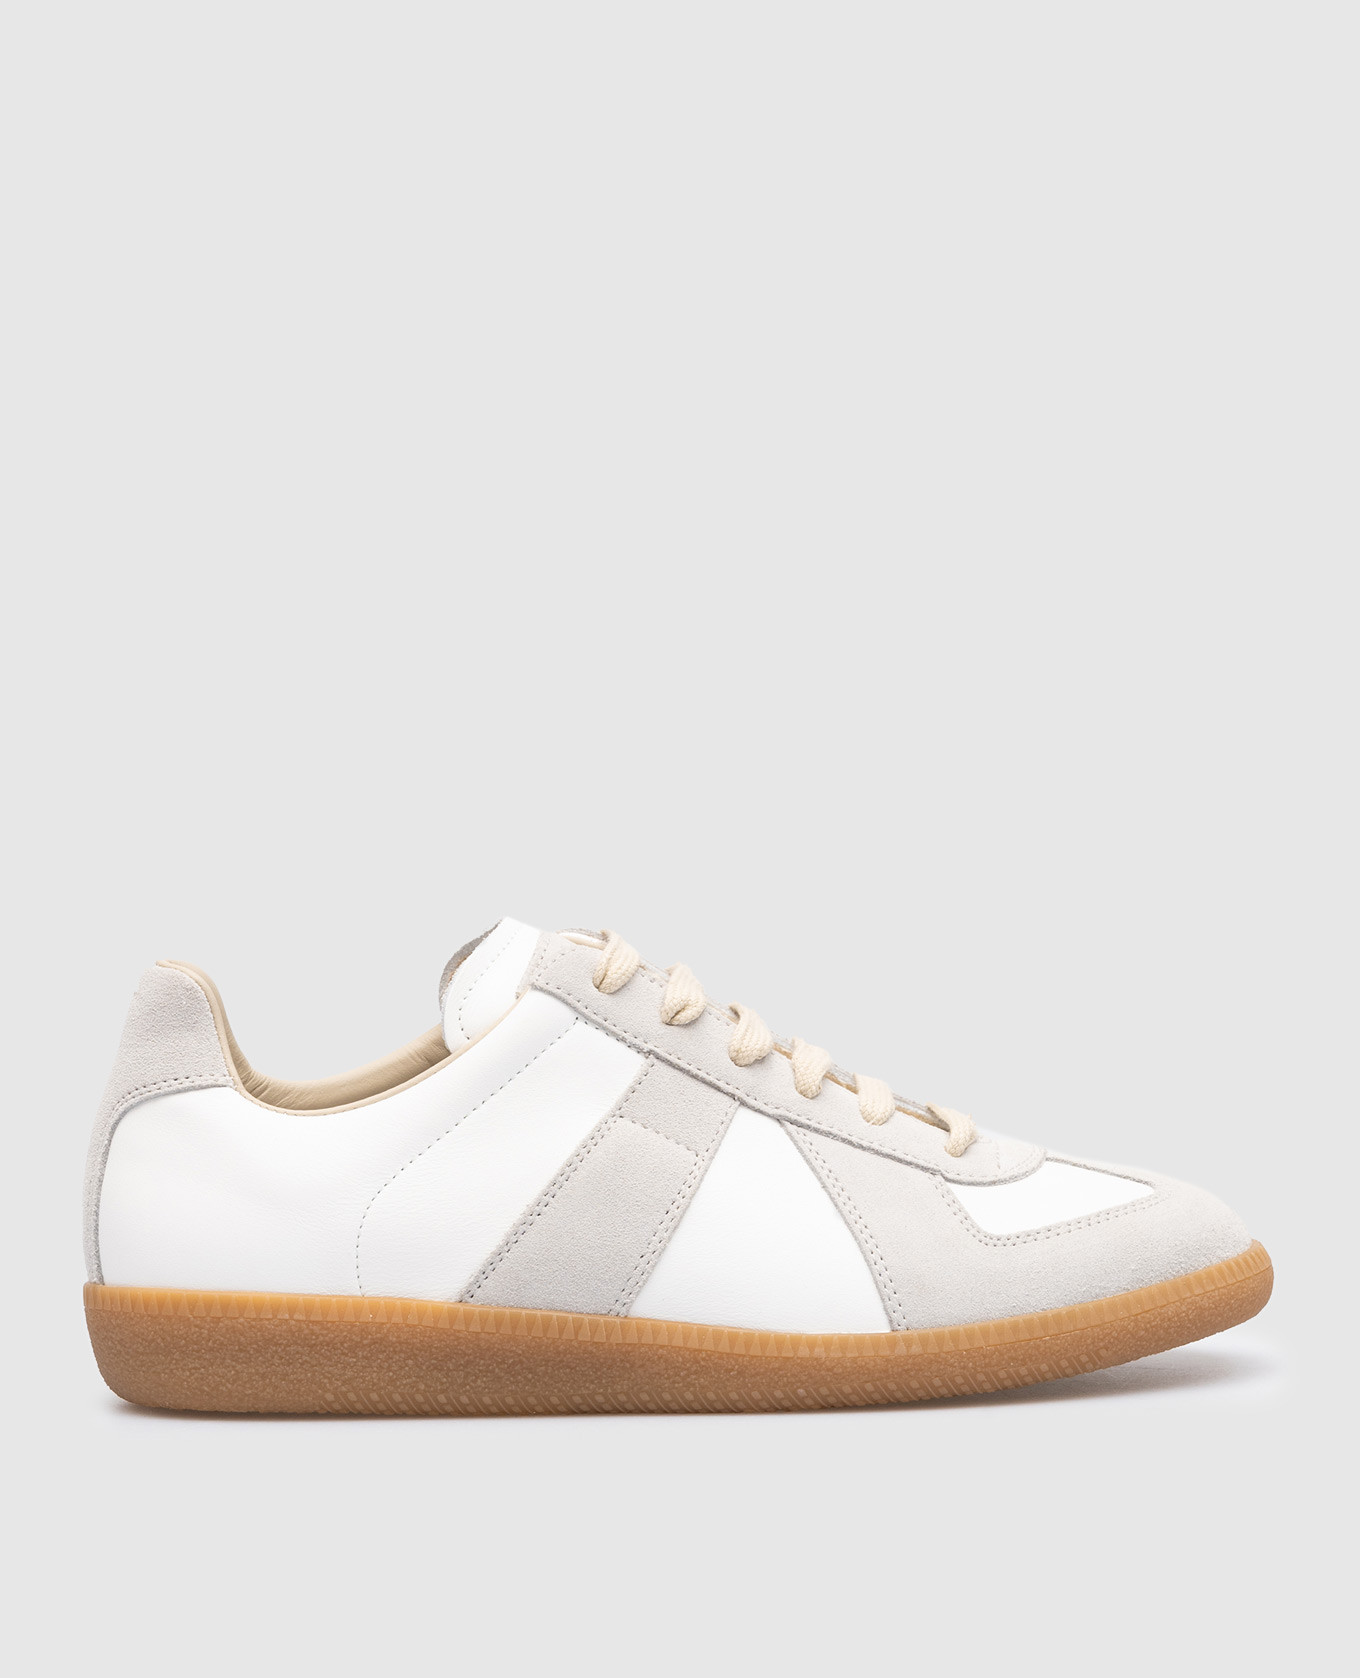 Replica white leather sneakers